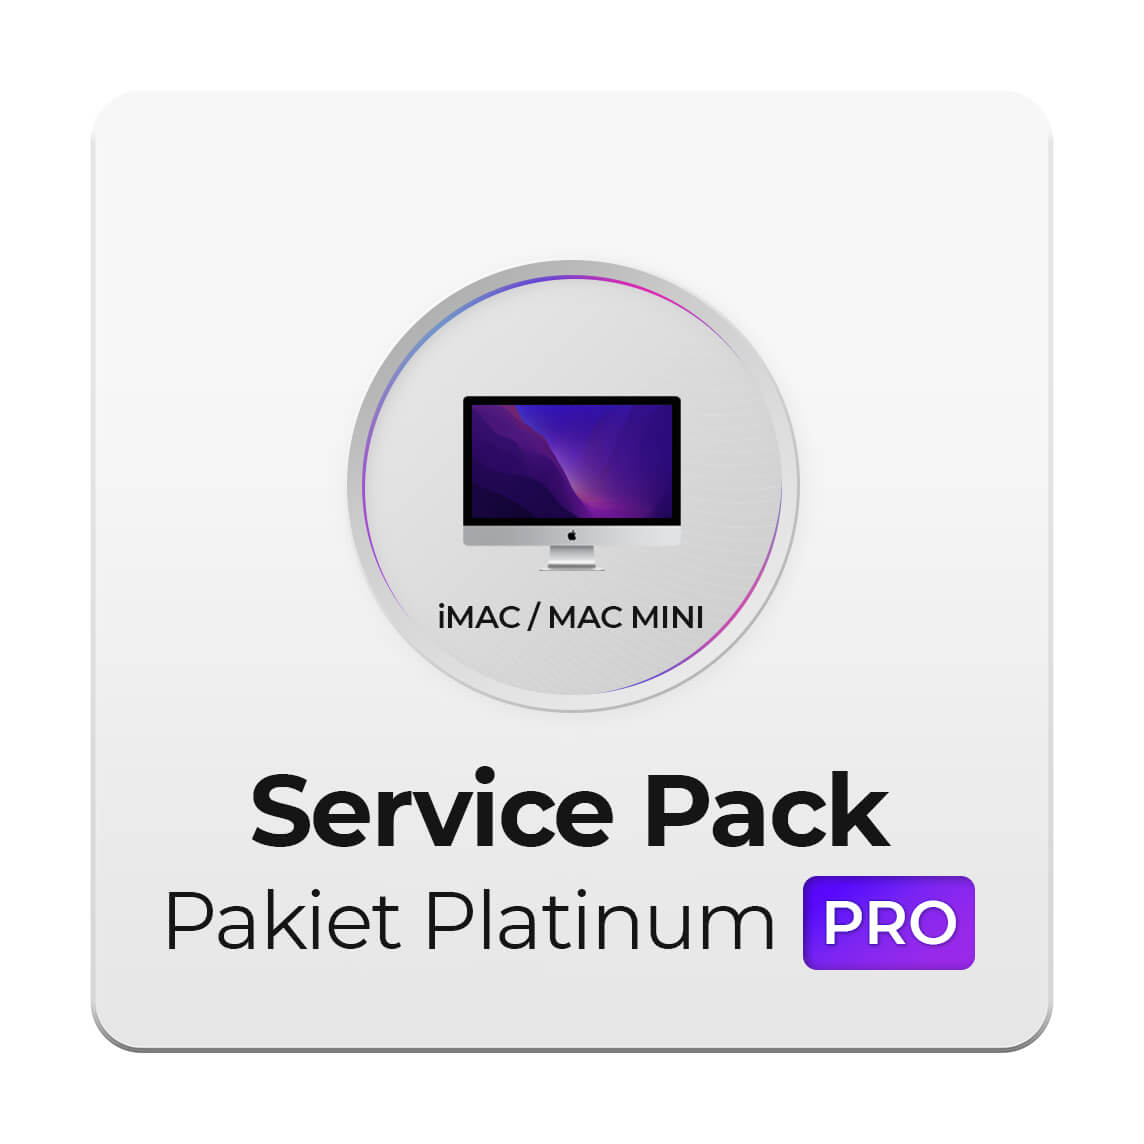 Service Pack - Pakiet Platinum PRO 4Y dla Apple iMac i Mac mini